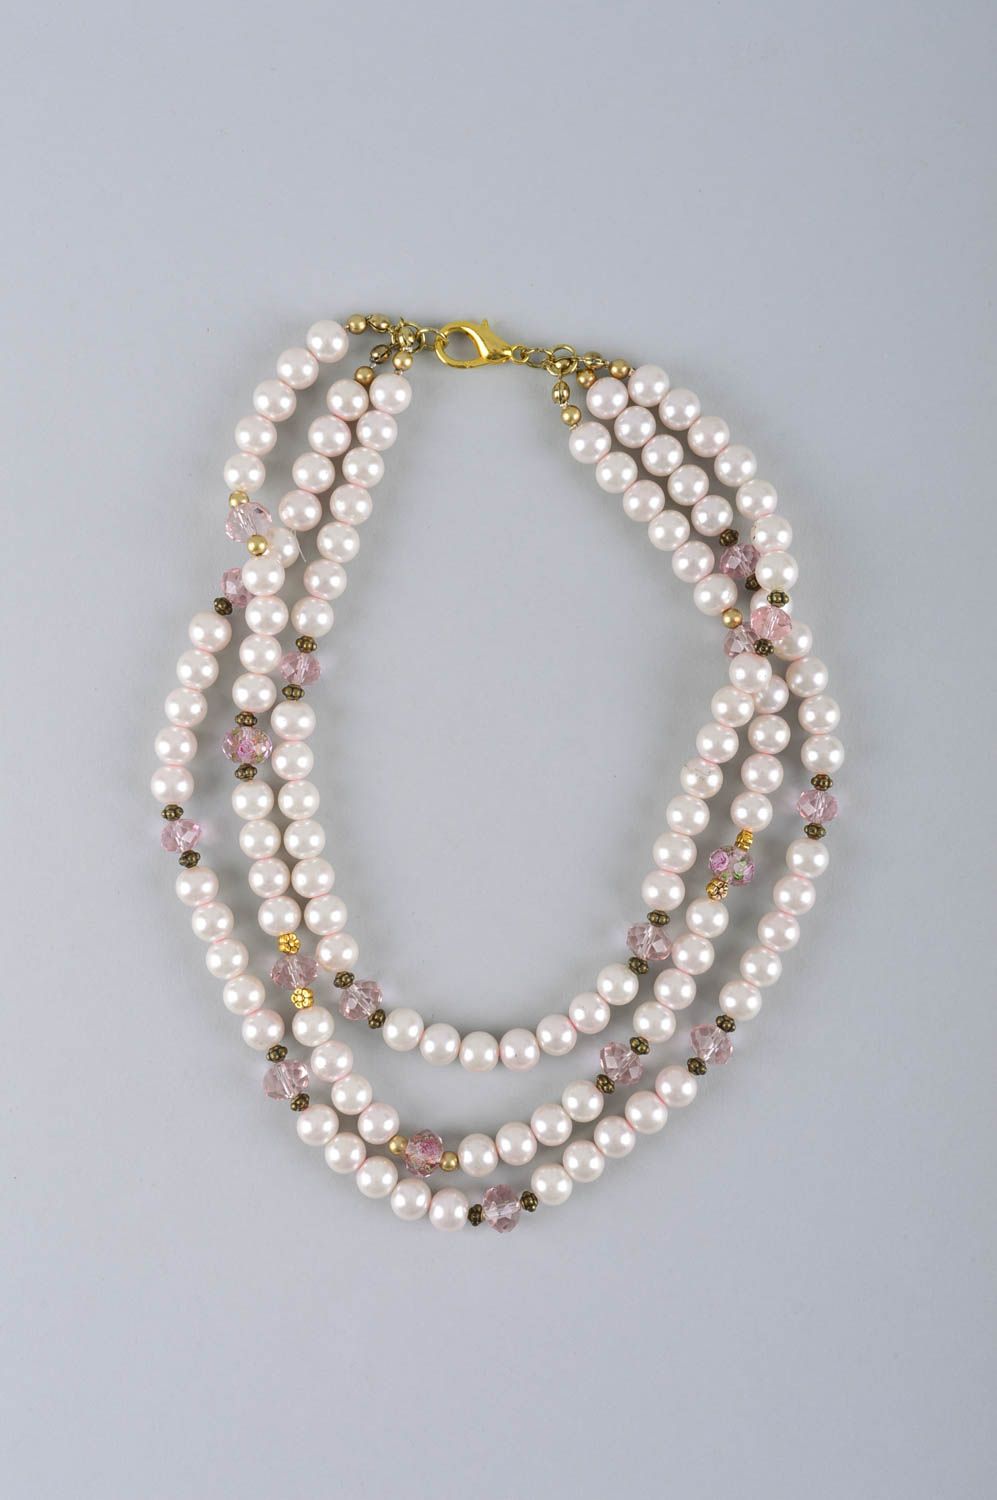 Handmade artificial pearls necklace unique designer jewelry accessory present photo 2